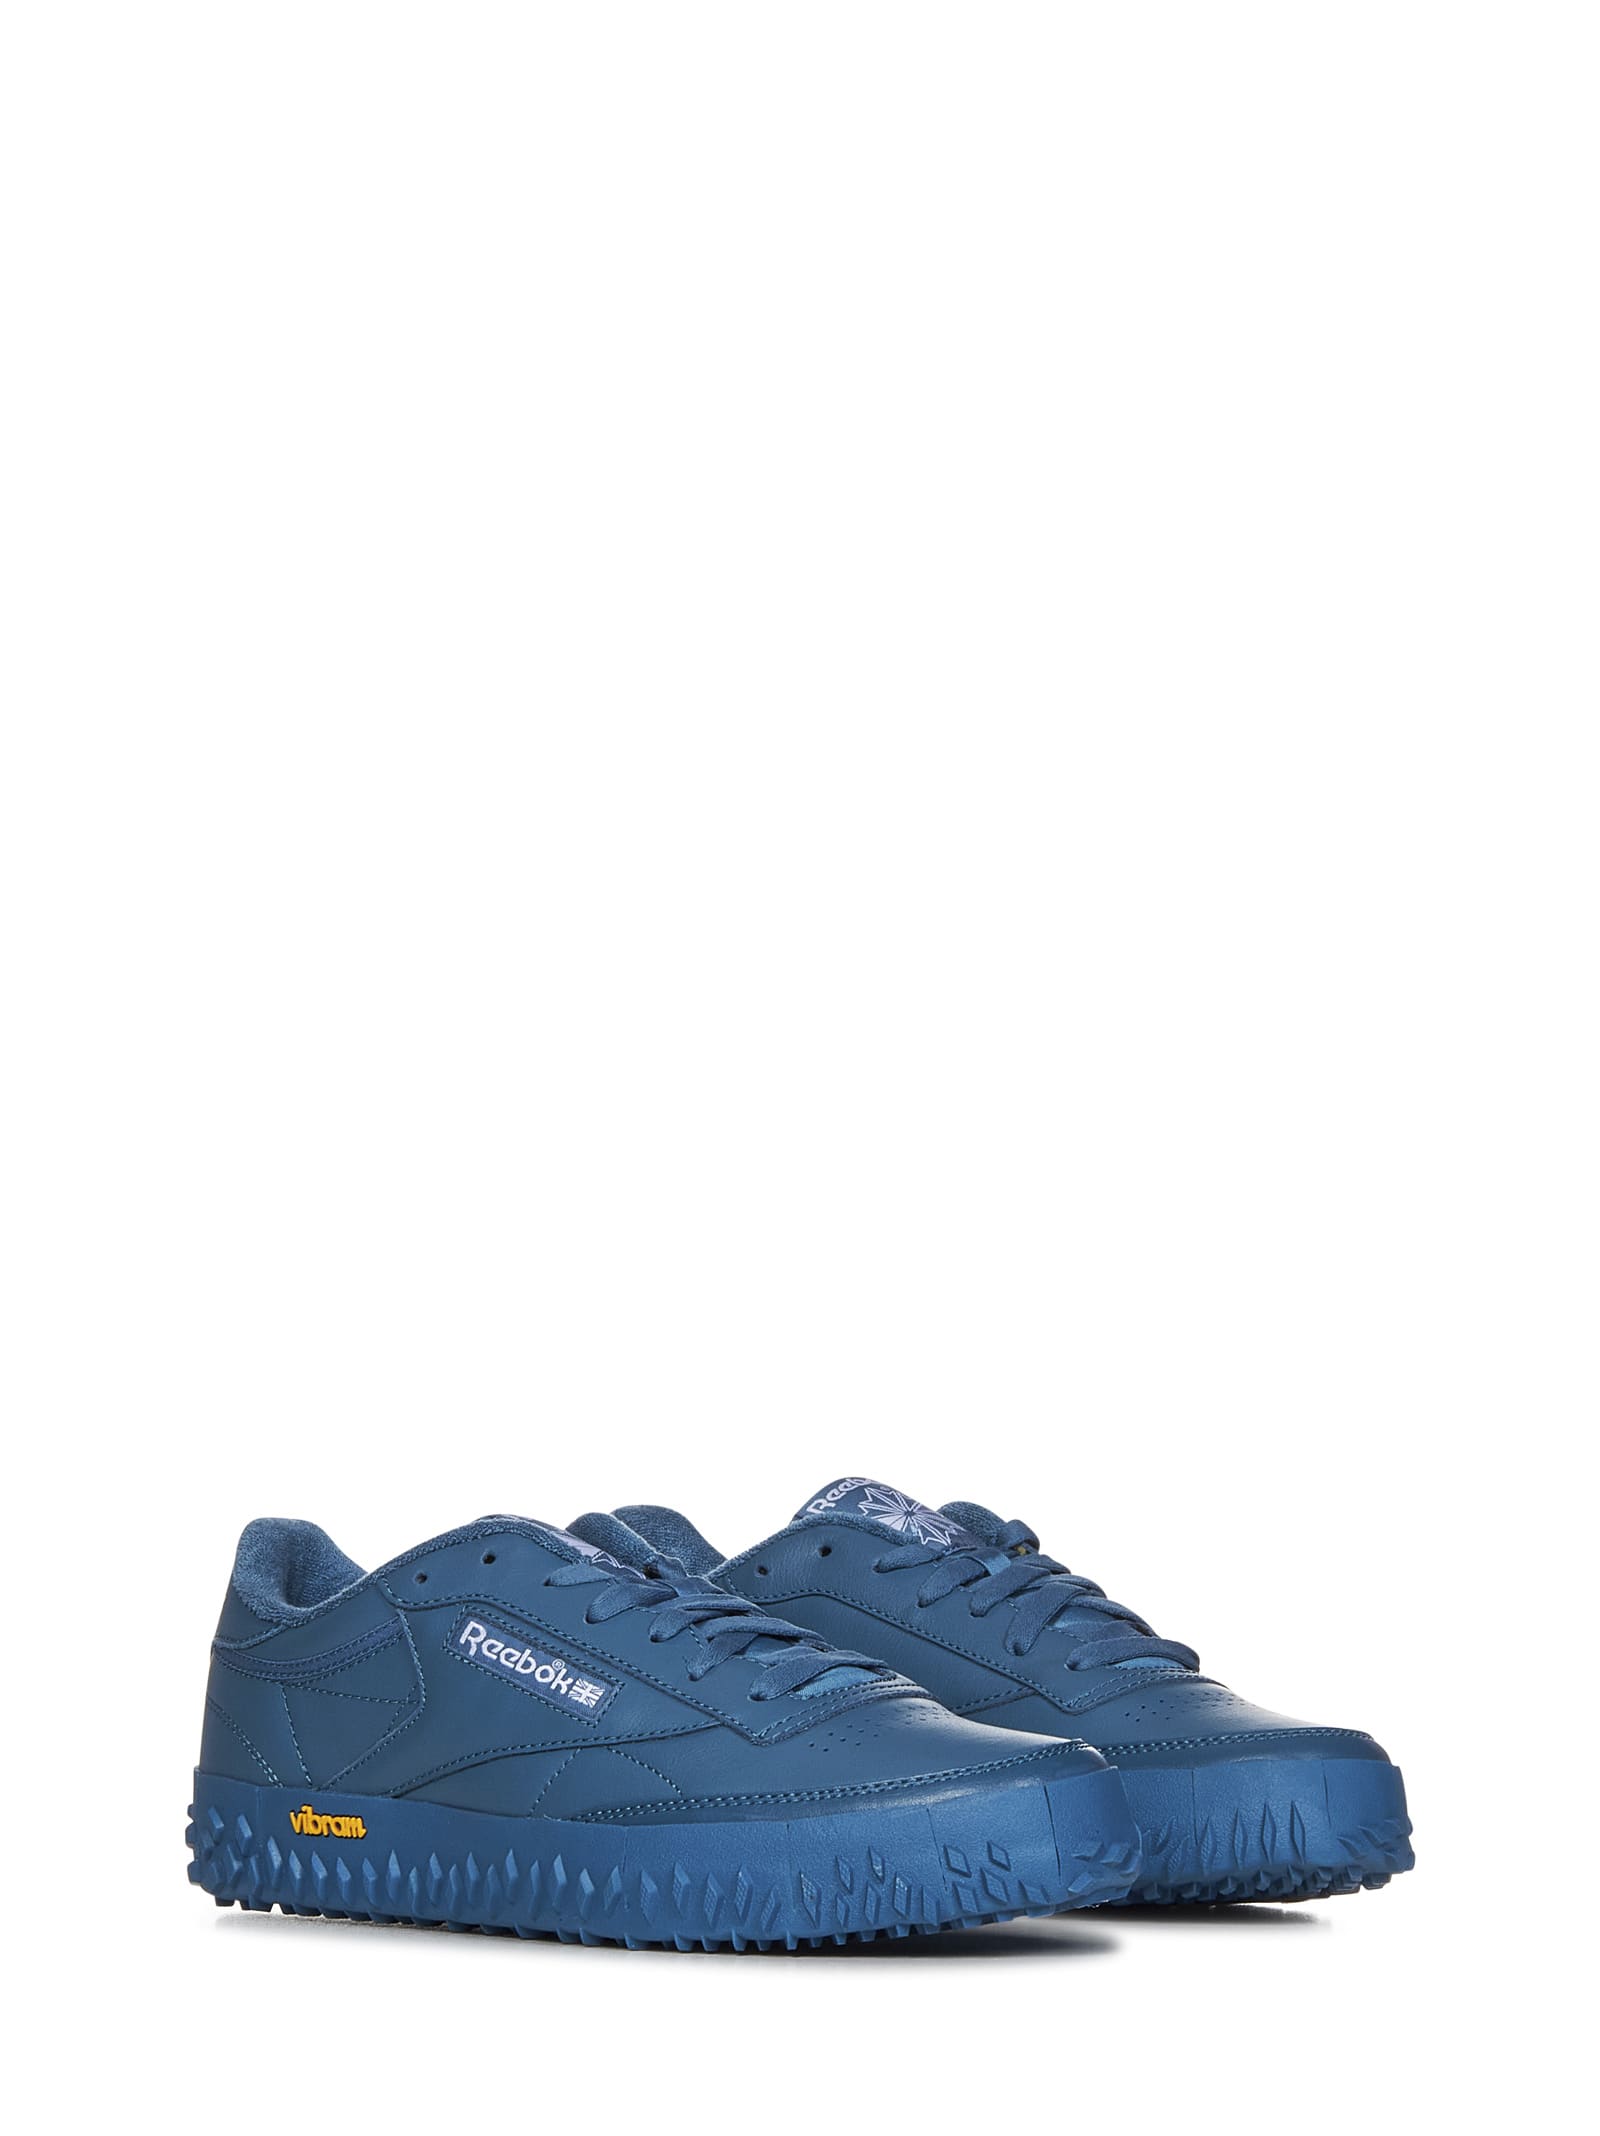 Shop Reebok Club C Vibram Sneakers In Blue